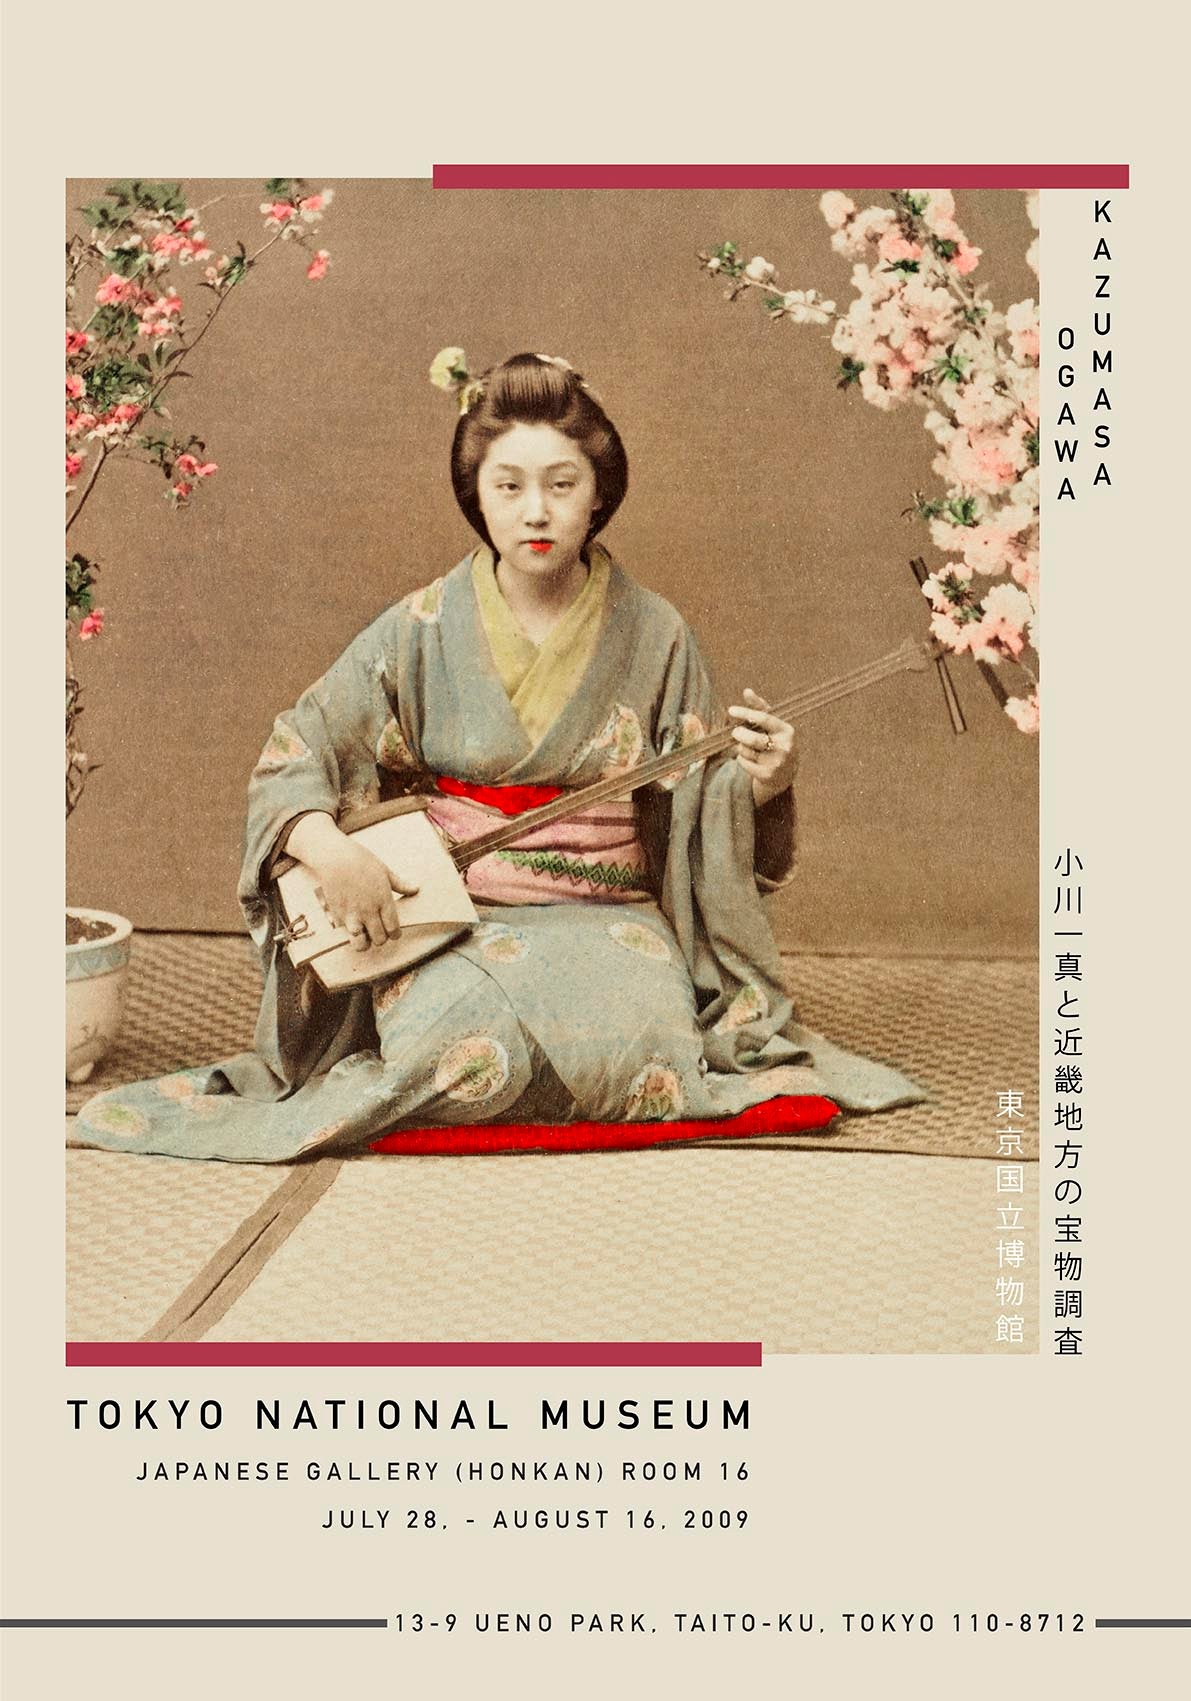 Geisha Playing Samisen by Kazumasa Exhibition Poster